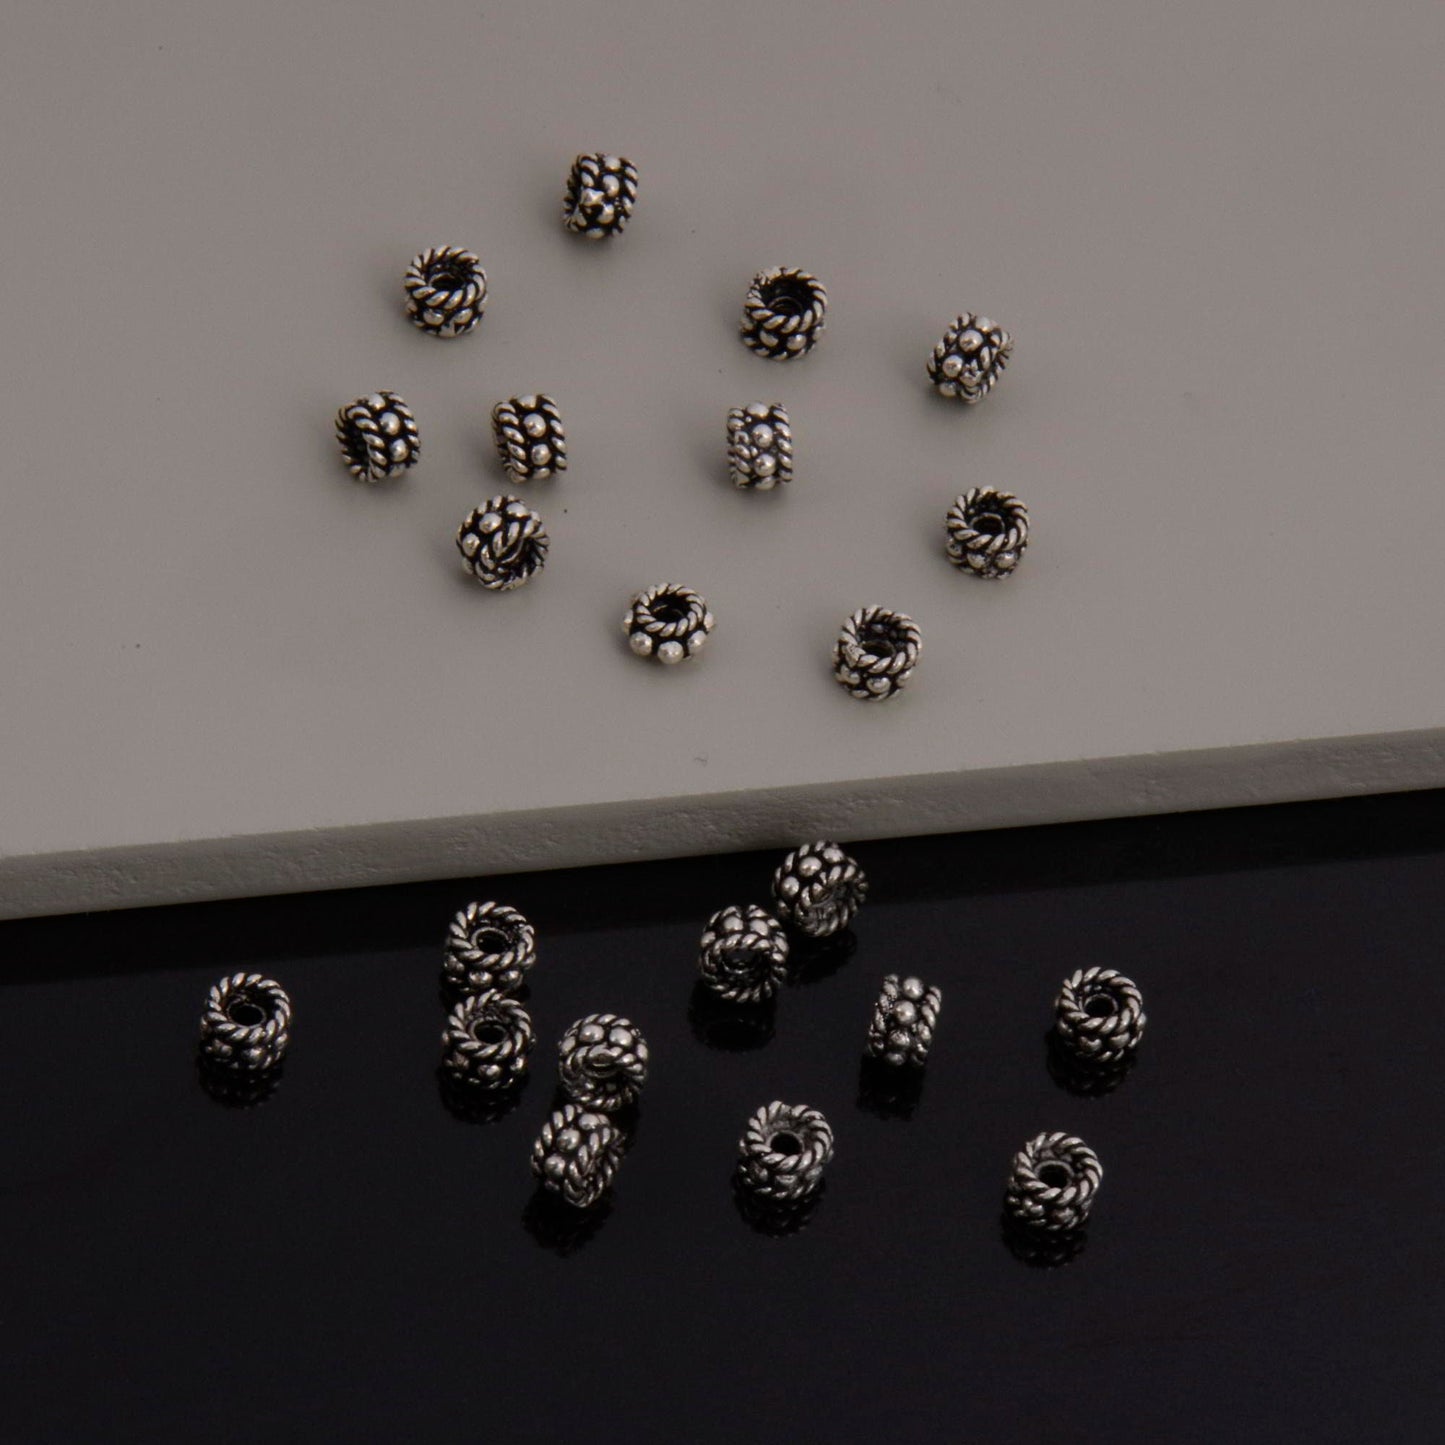 24K Gold Vermeil Separators, Handmade Silver Beads in 24K Gold, 925 Solid Silver Beads, Spacer Beads, Jewelry Supply, M/VM144